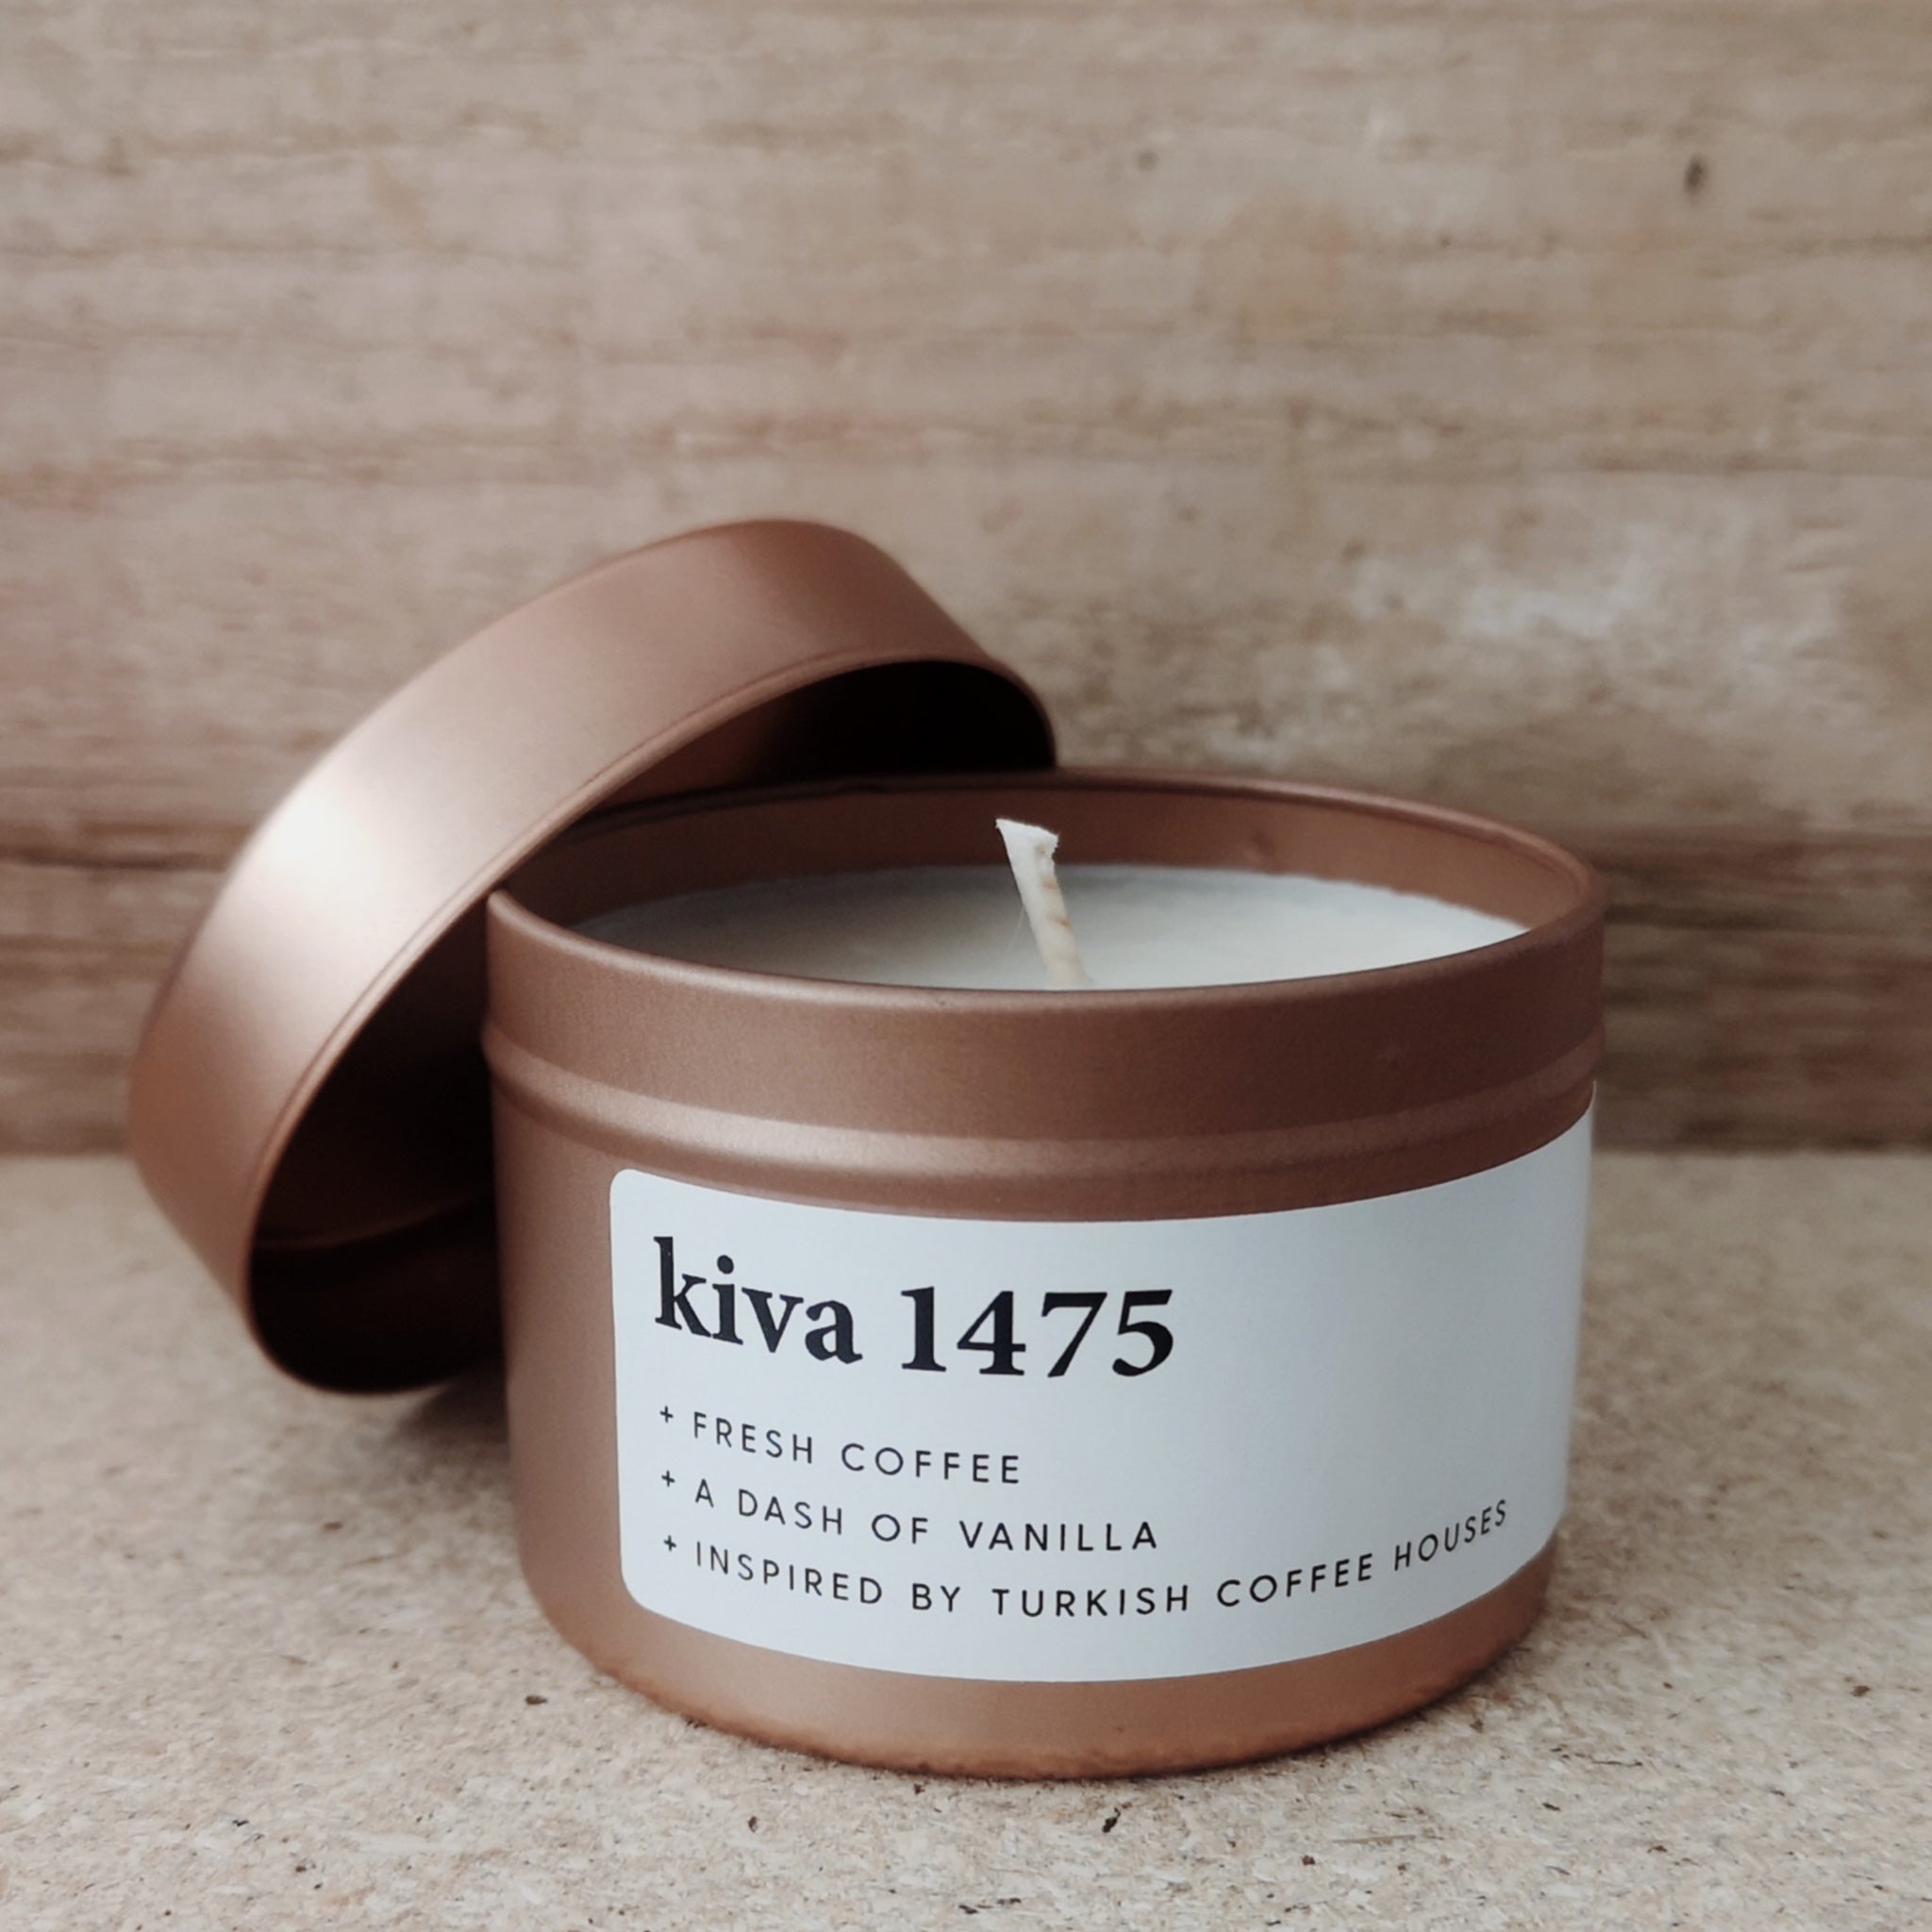 Keynvor Travel Tin Candle - Kiva 1475